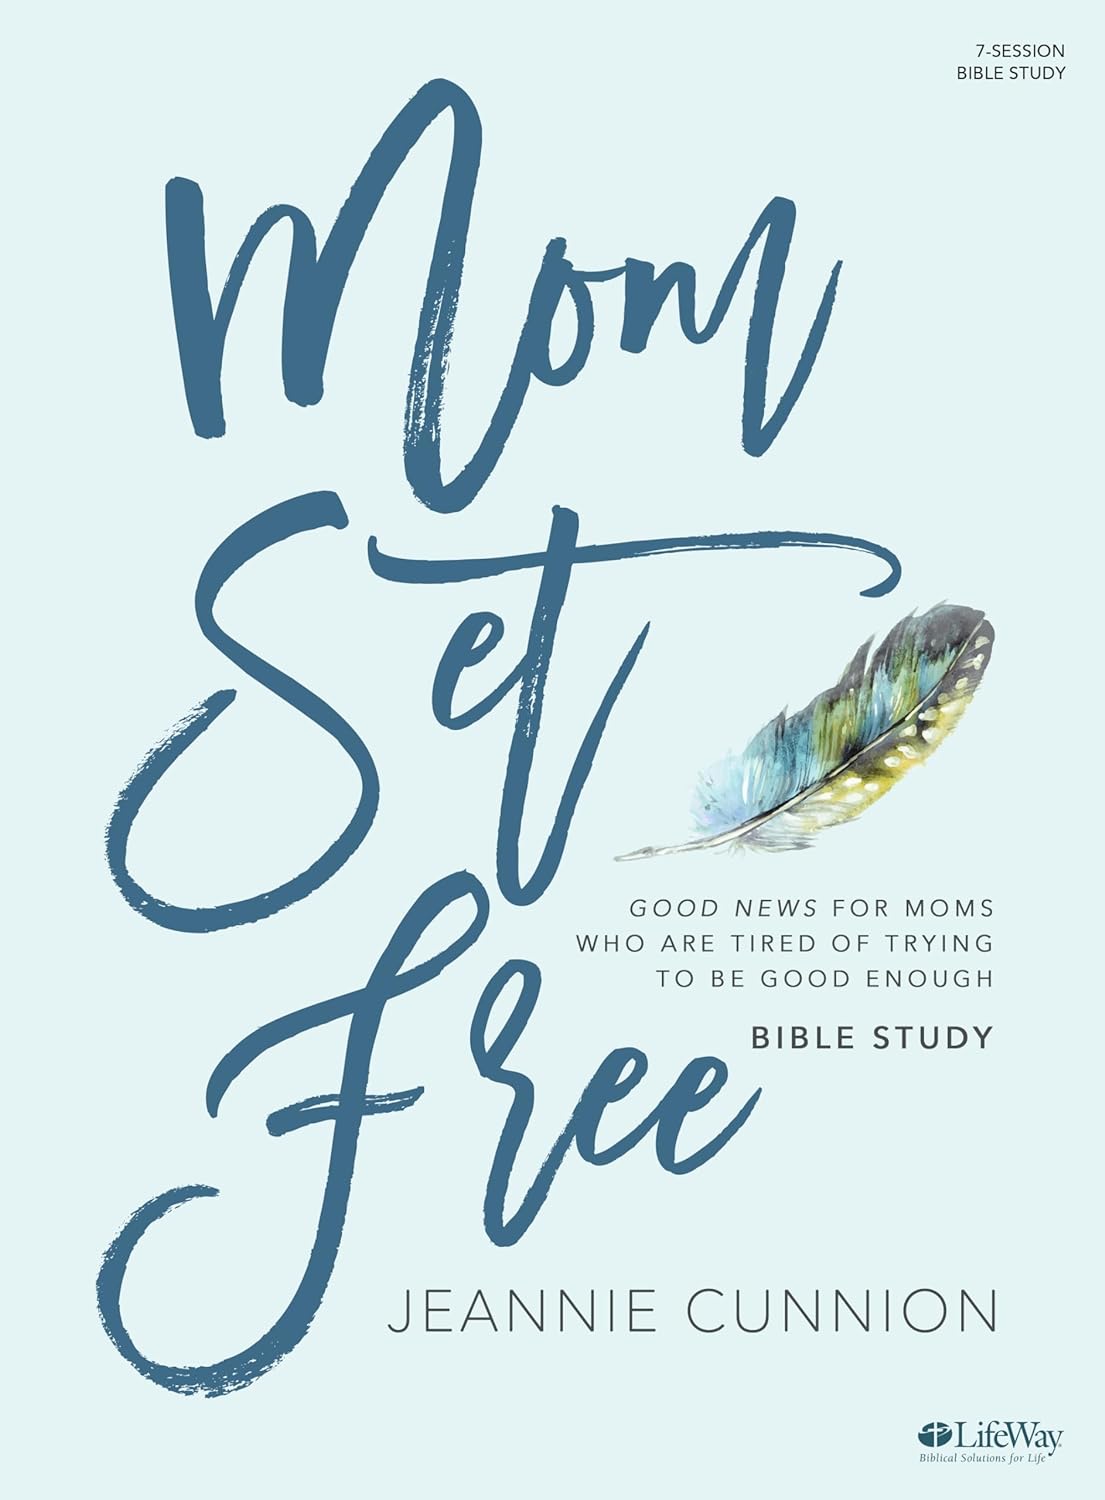 Mom Set Free - mom bible study